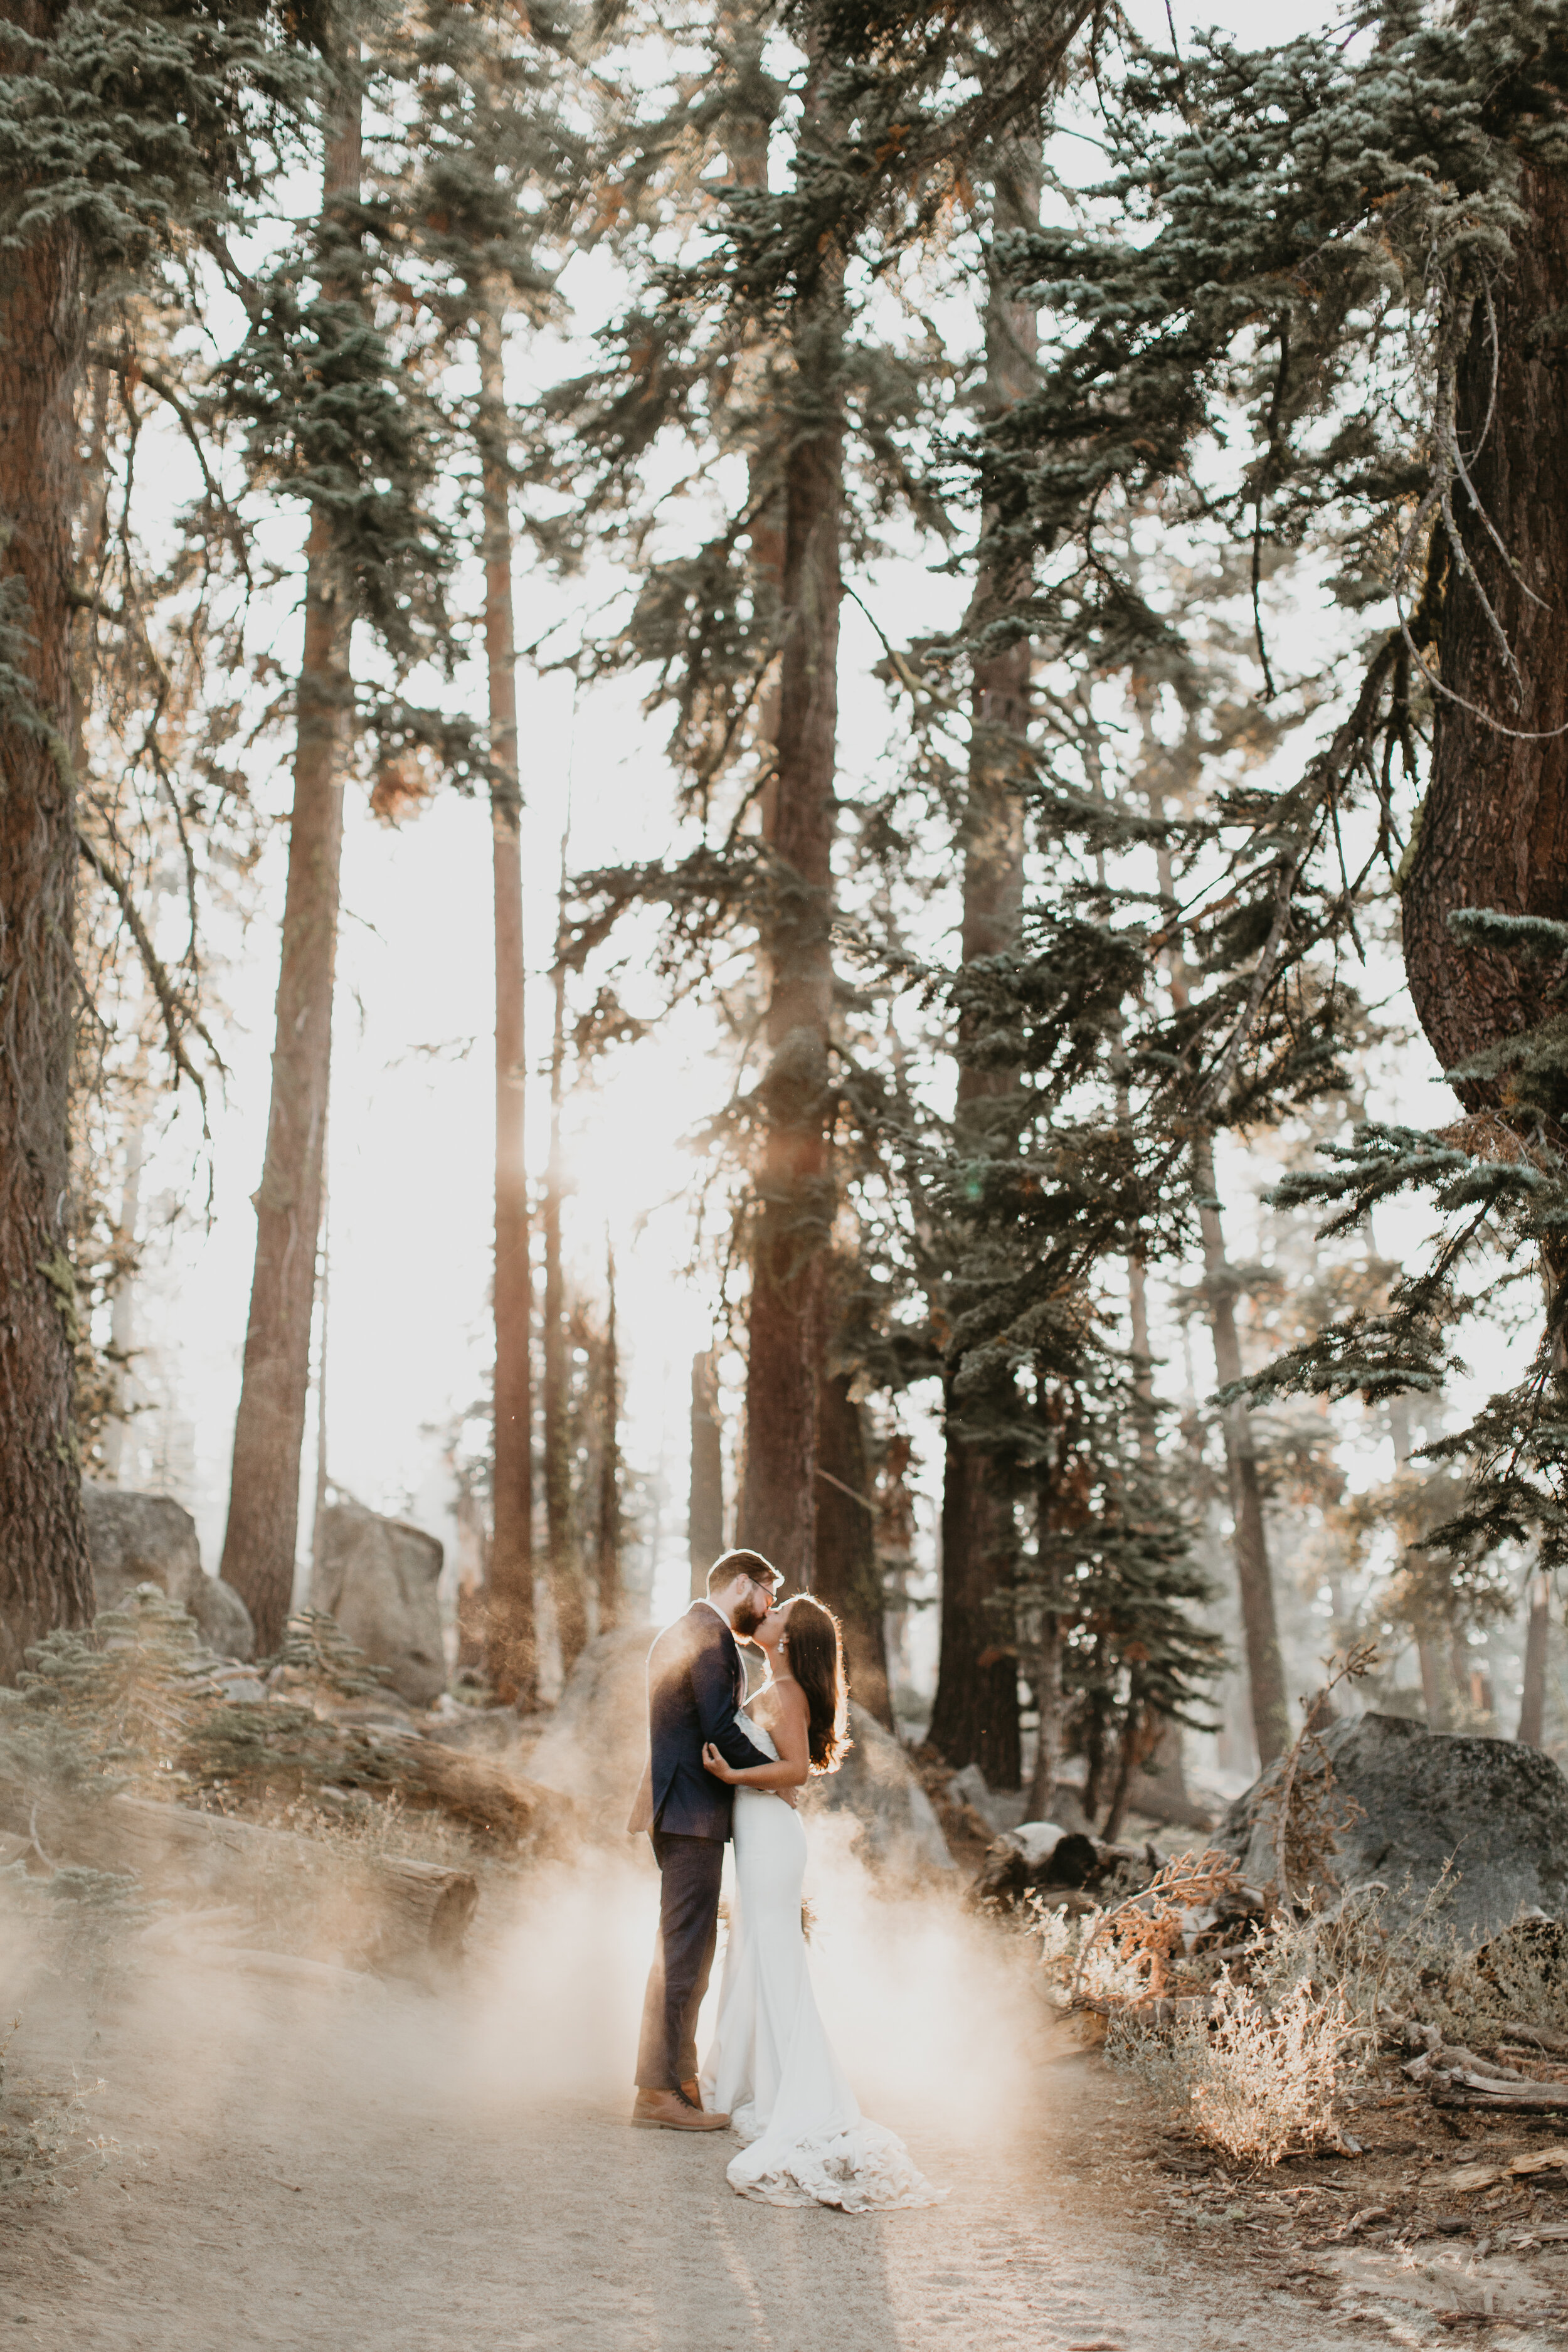 Nicole-Daacke-Photography-yosemite-national-park-elopement-photography-adventure-elopement-in-yosemite-taft-point-sunset-elopement-photographs-california-intimate-destination-wedding-in-yosemite-national-park-6997.jpg